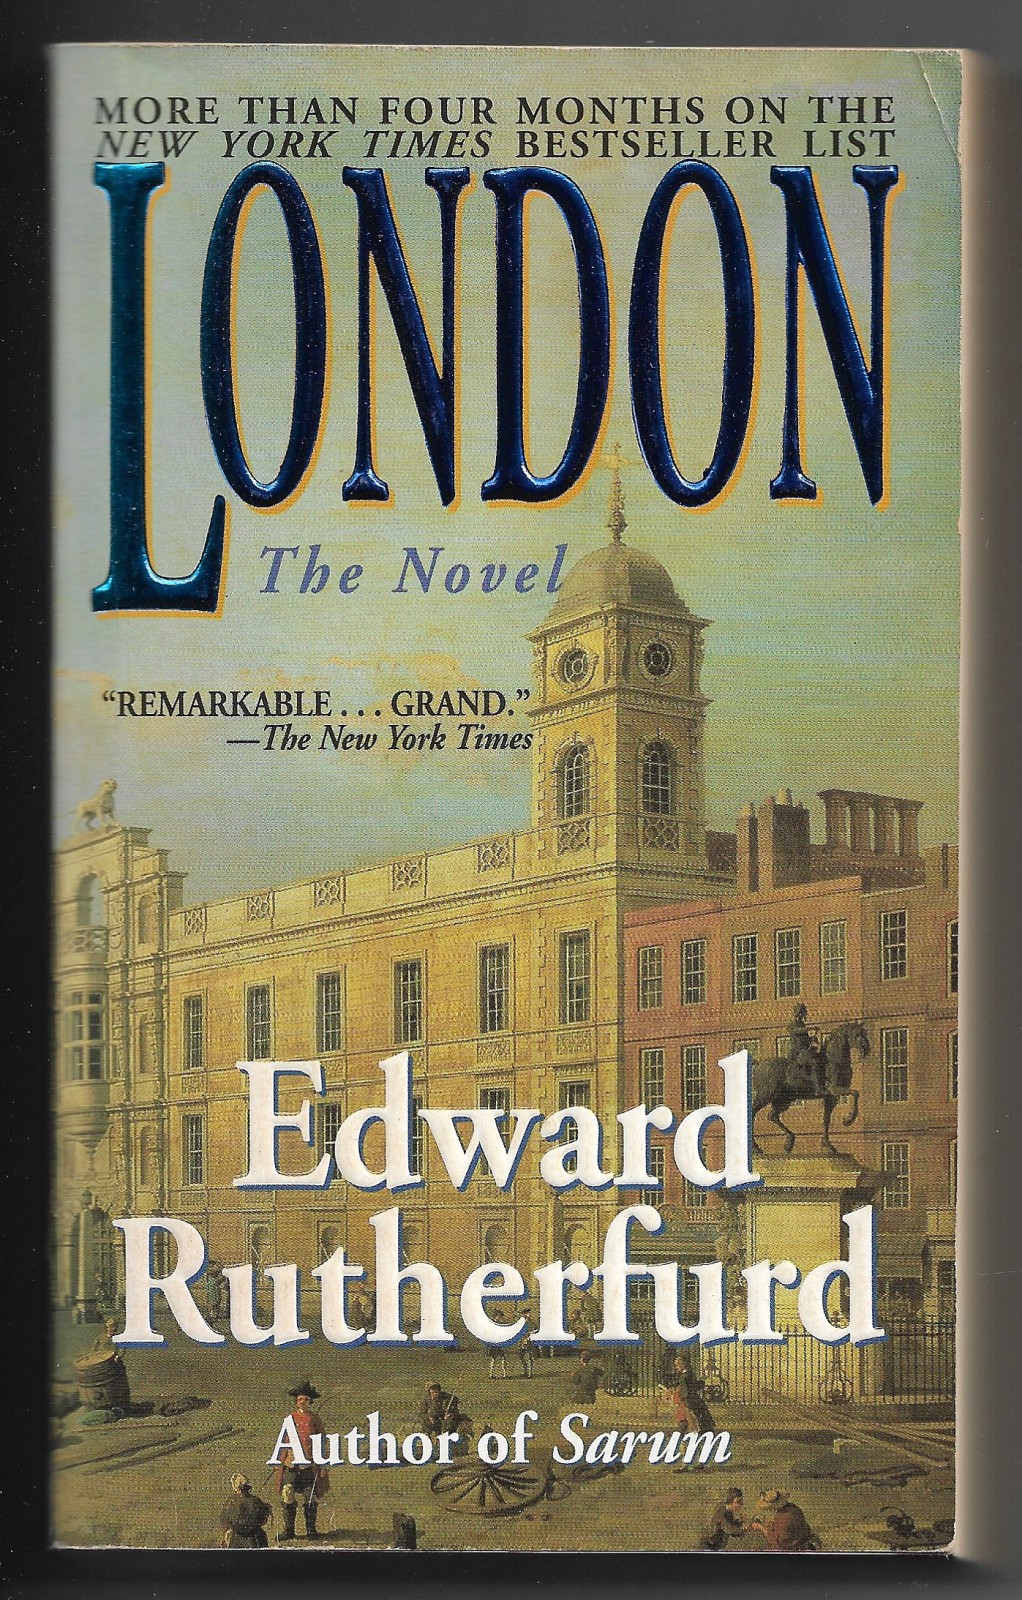 London - Rutherfurd Edward